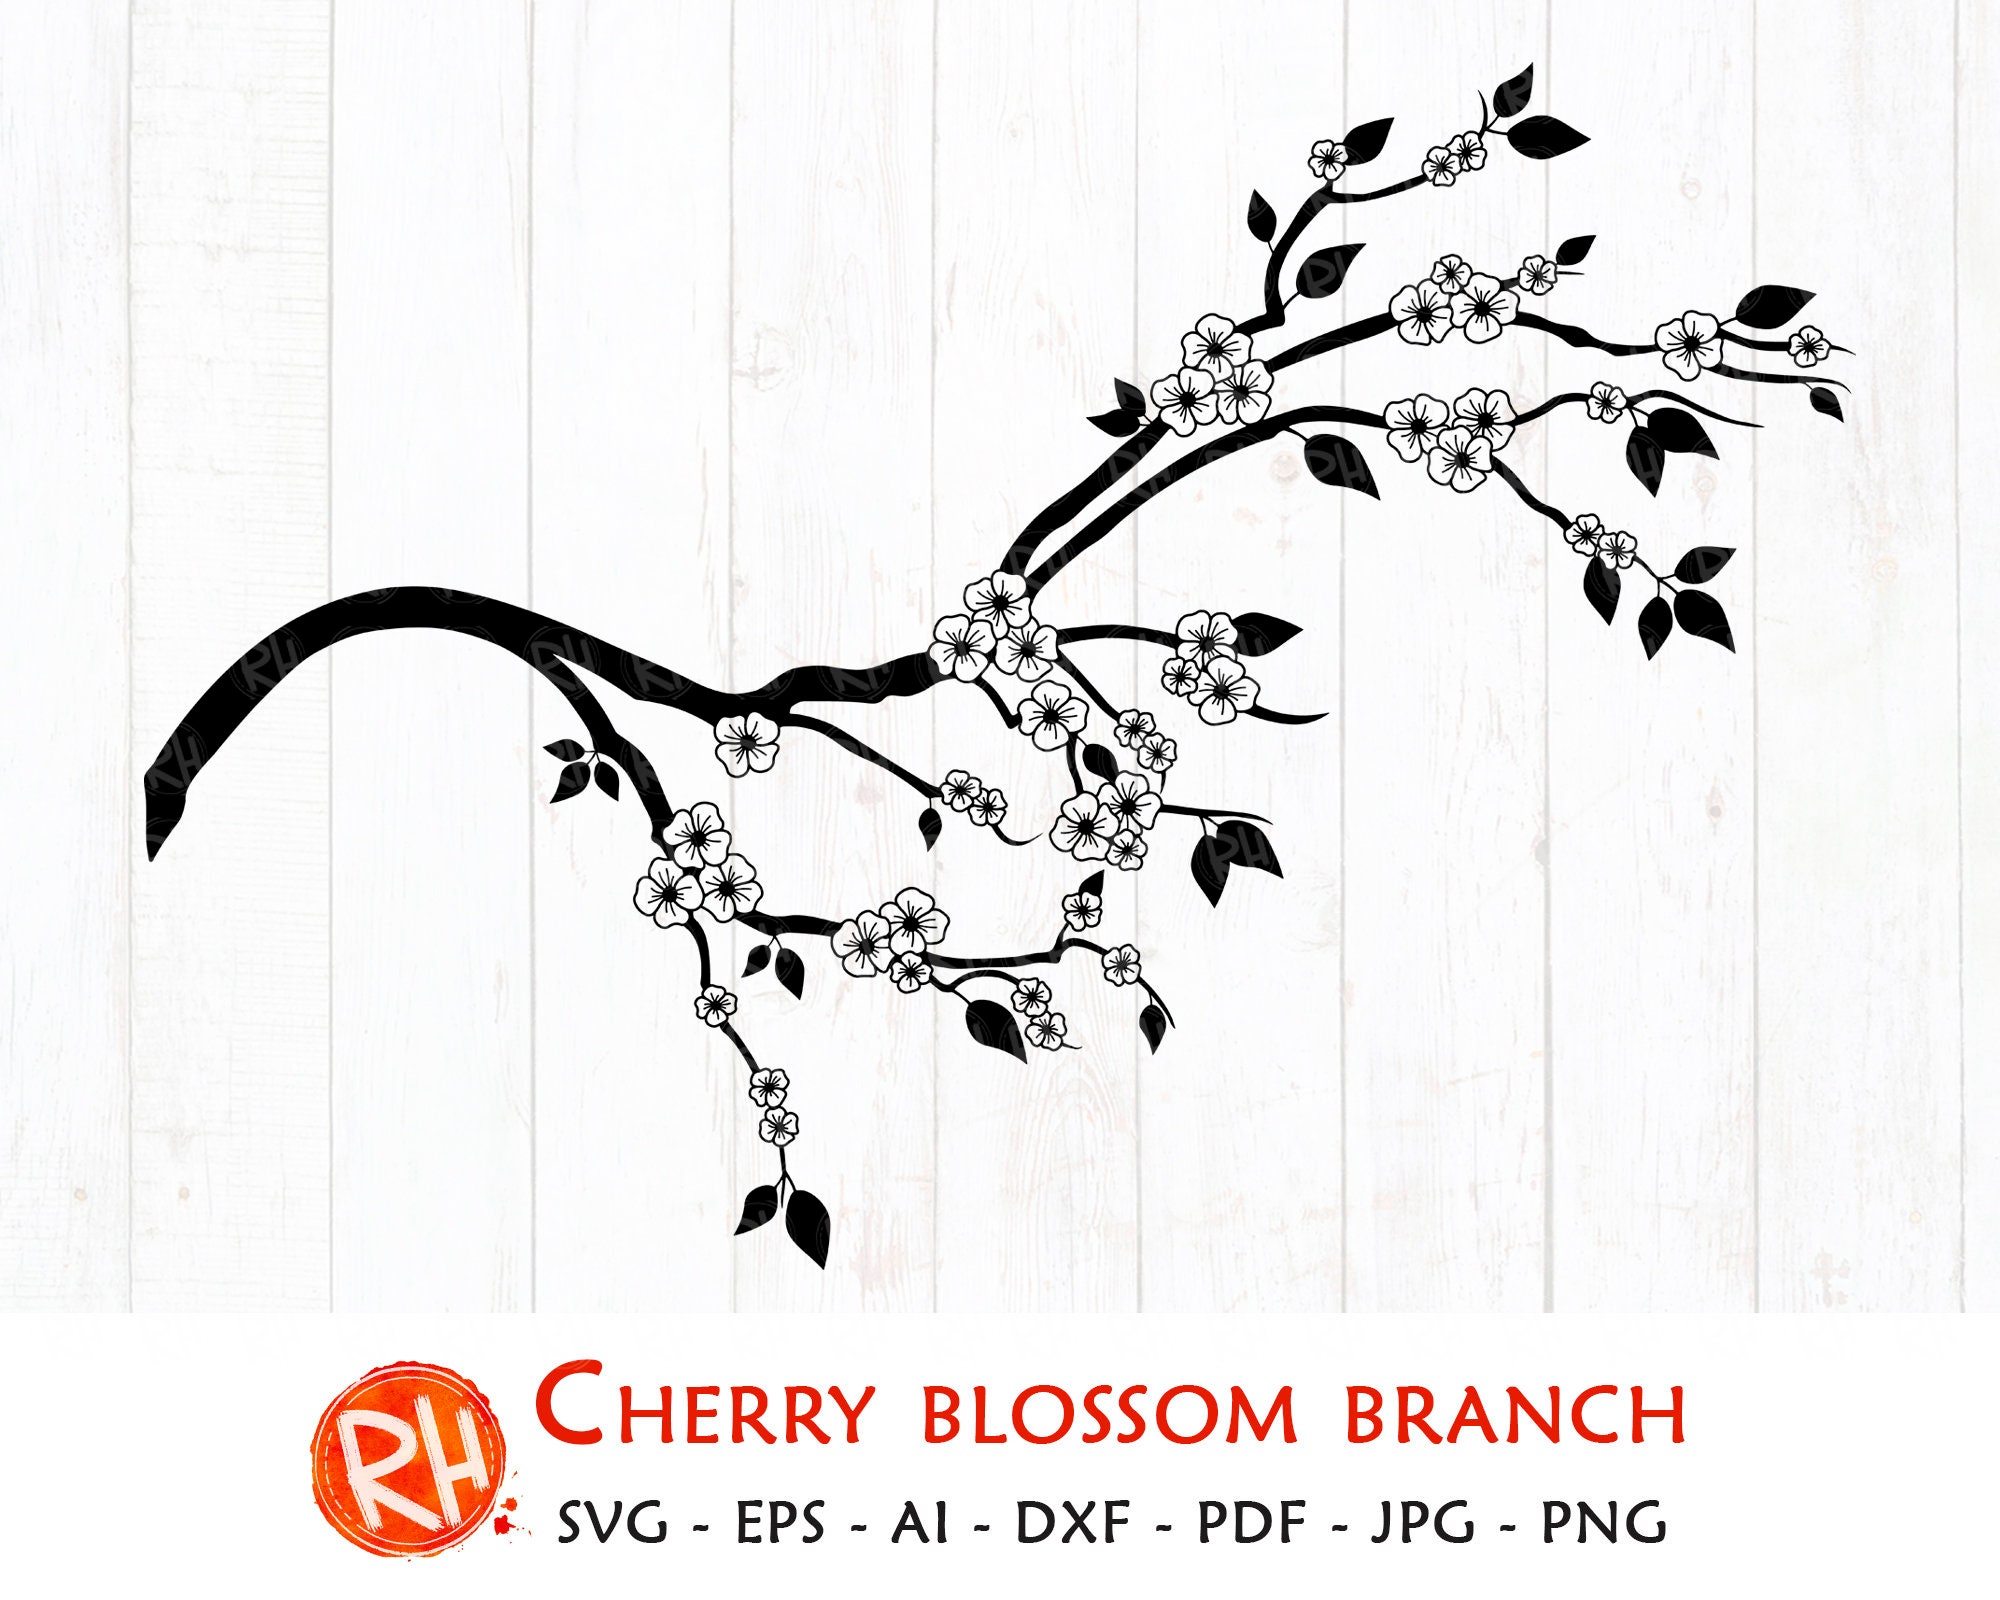 Cherry blossoms branch svg Sakura branch with flowers svg | Etsy